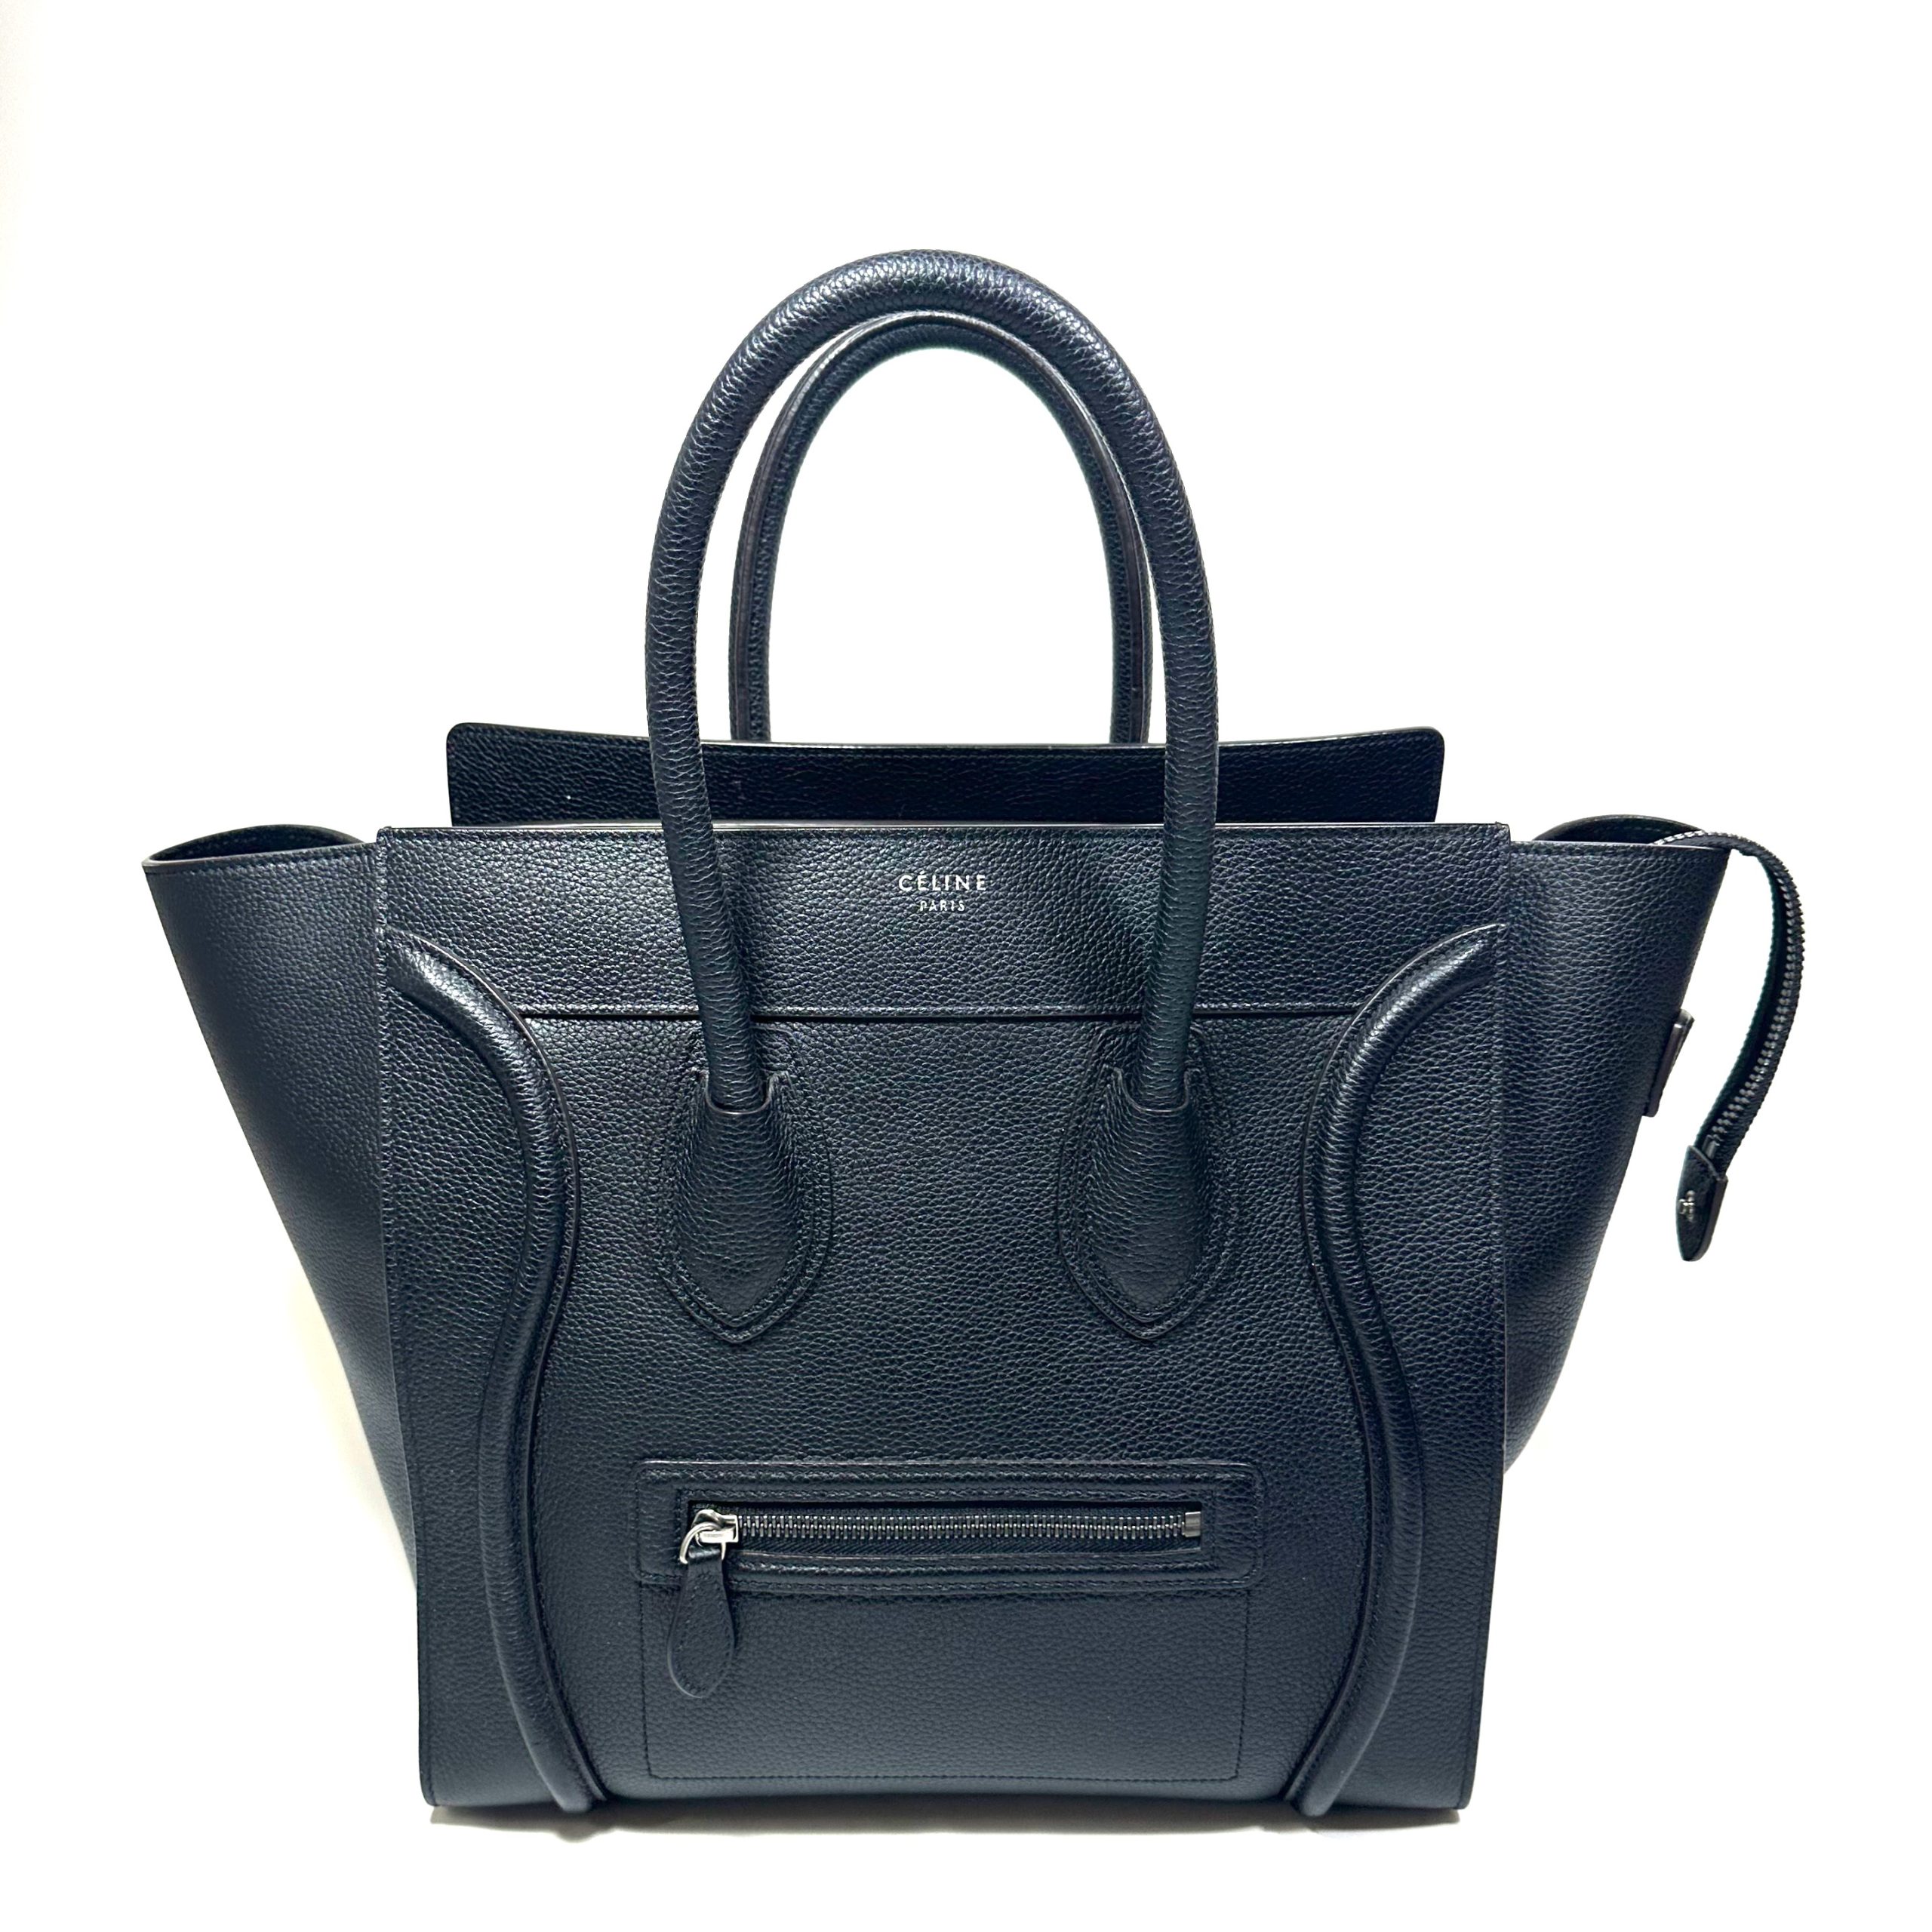 Finally got my dream bag - Celine Nano Luggage : r/handbags